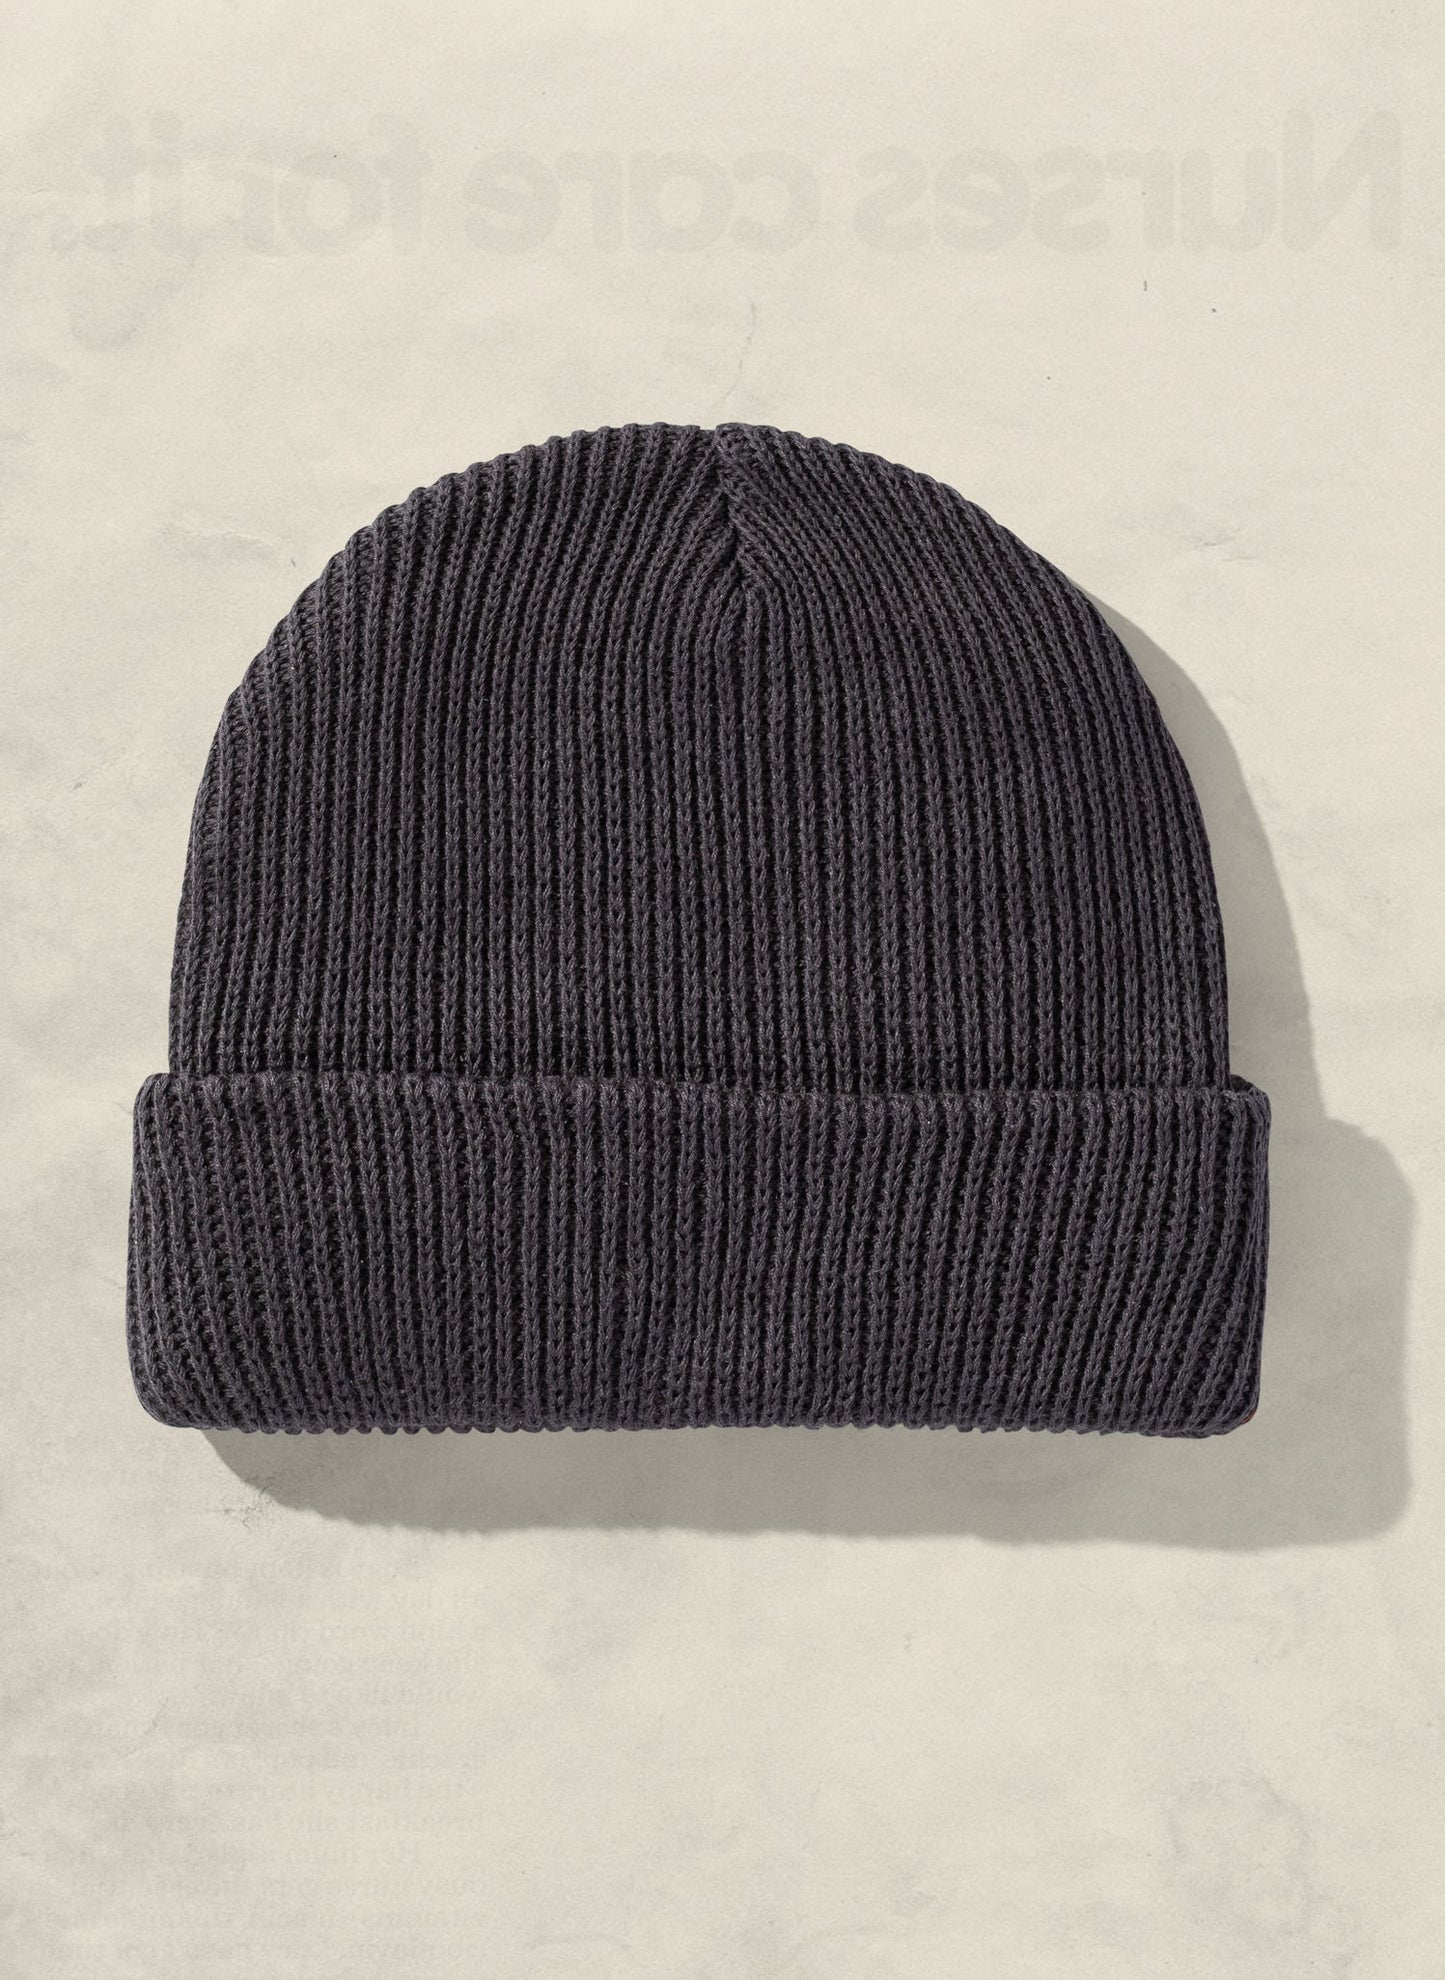 Weld Mfg Hemp Slacker Knit Ribbed Beanie Hat - Vintage Inspired Warm Comfortable Hat - Charcoal Grey